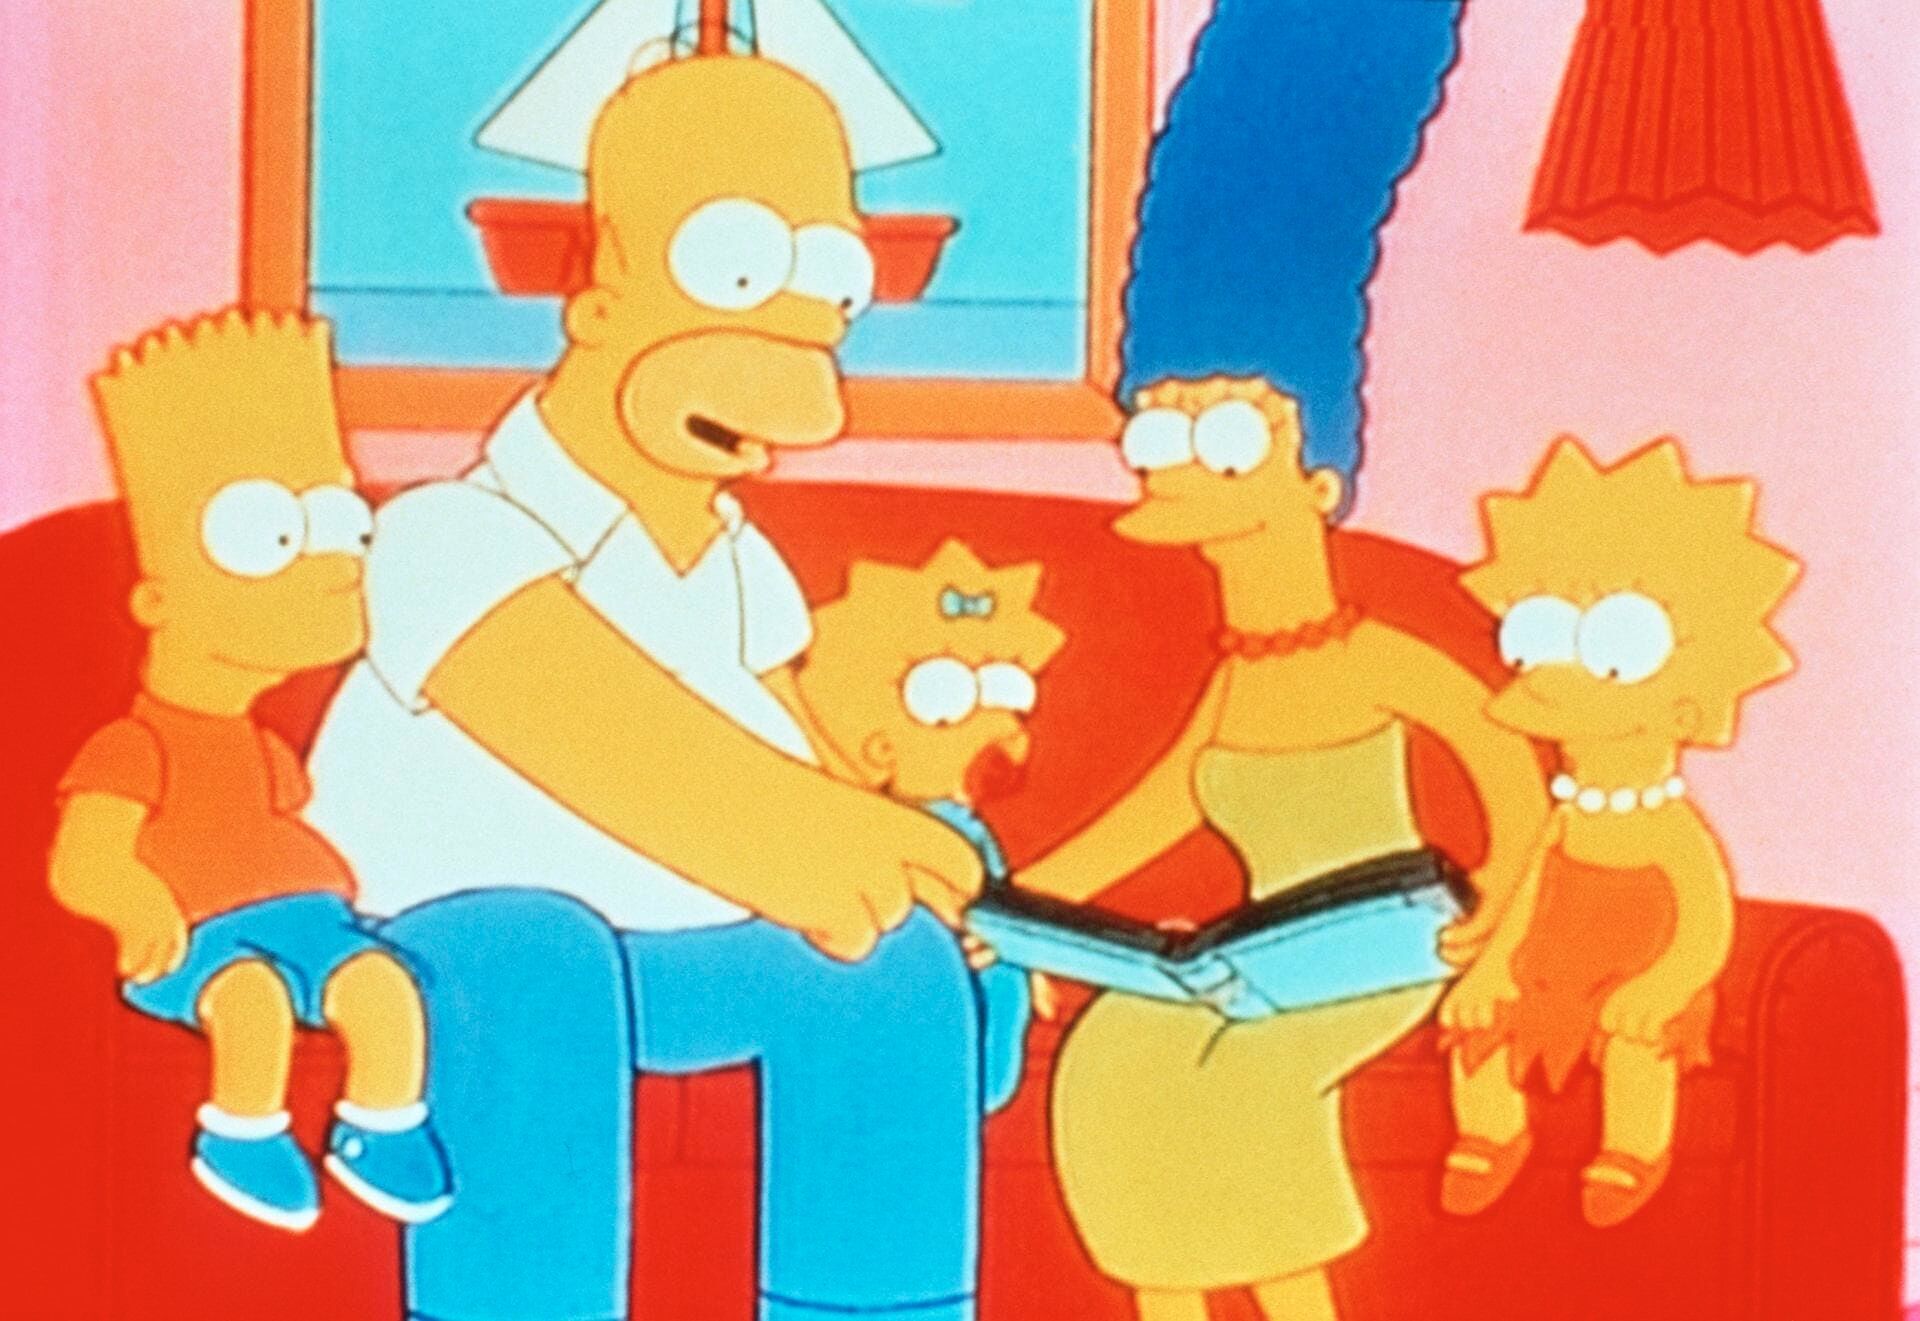 The Simpsons - Seizoen 6